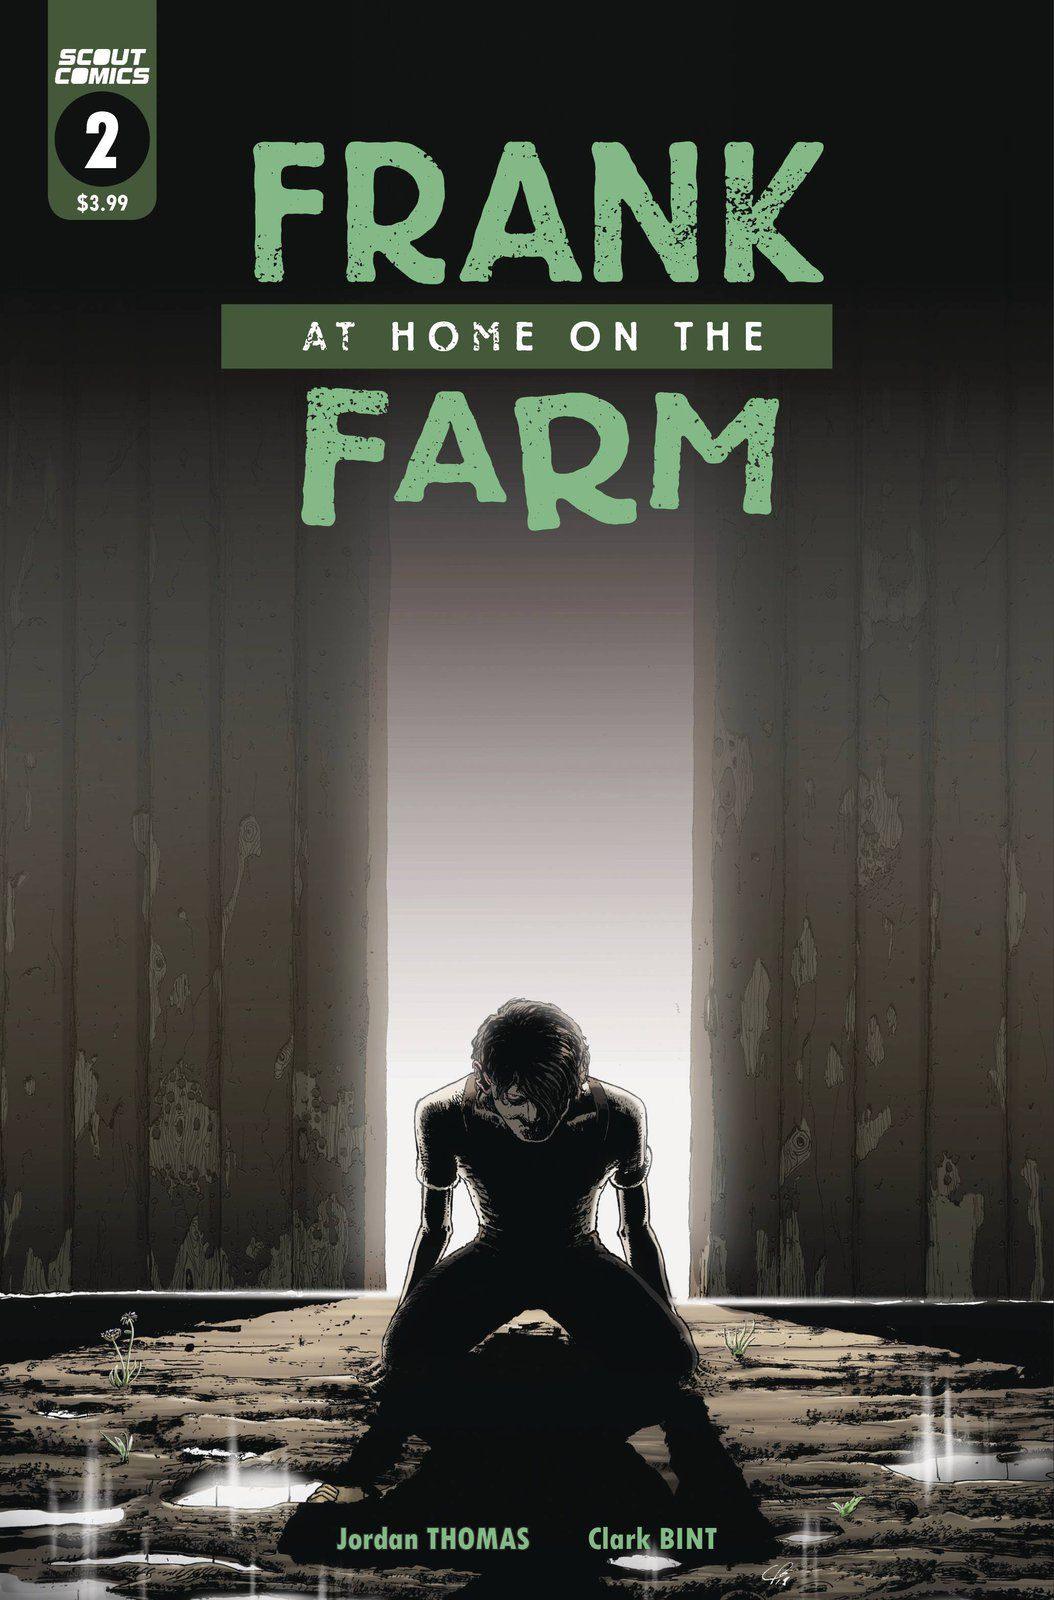 FRANK AT HOME ON THE FARM #2 (SHIPS 01-01-21) - PCKComics.com